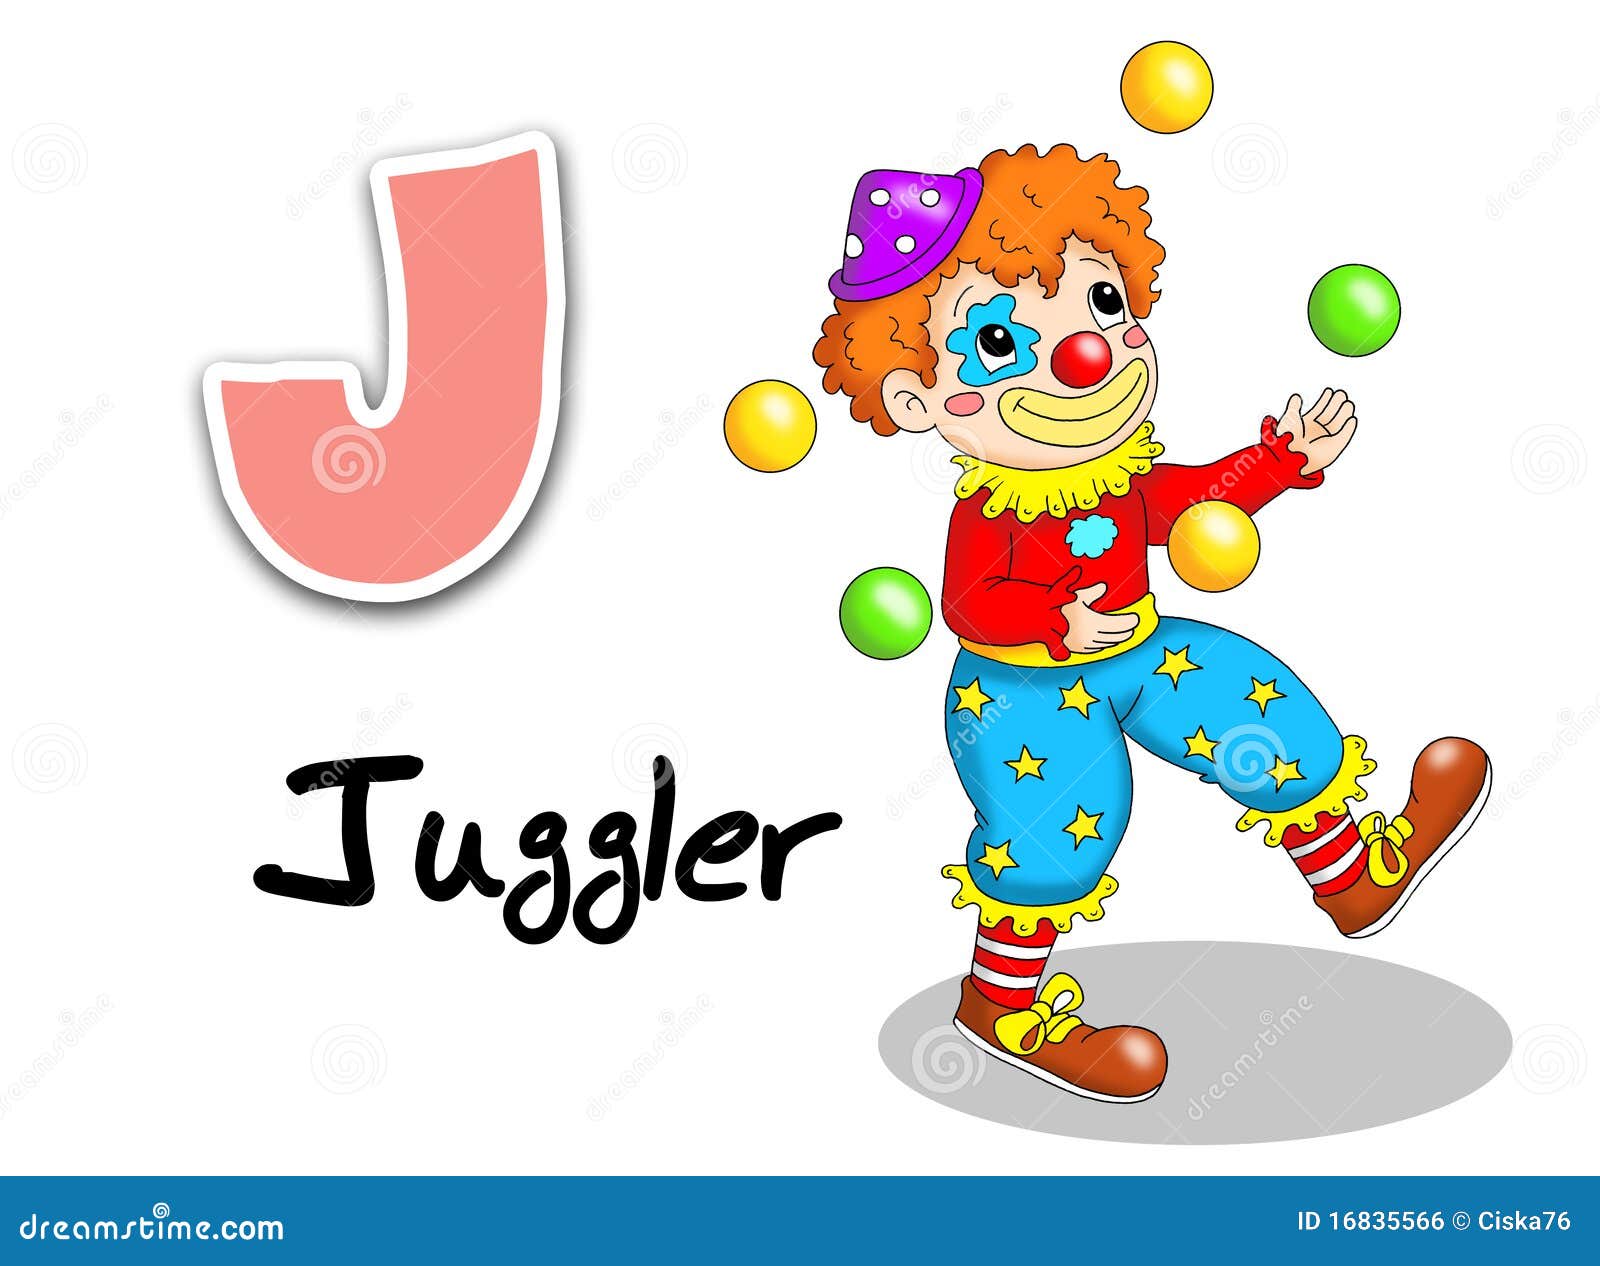 free clipart jugglers - photo #47